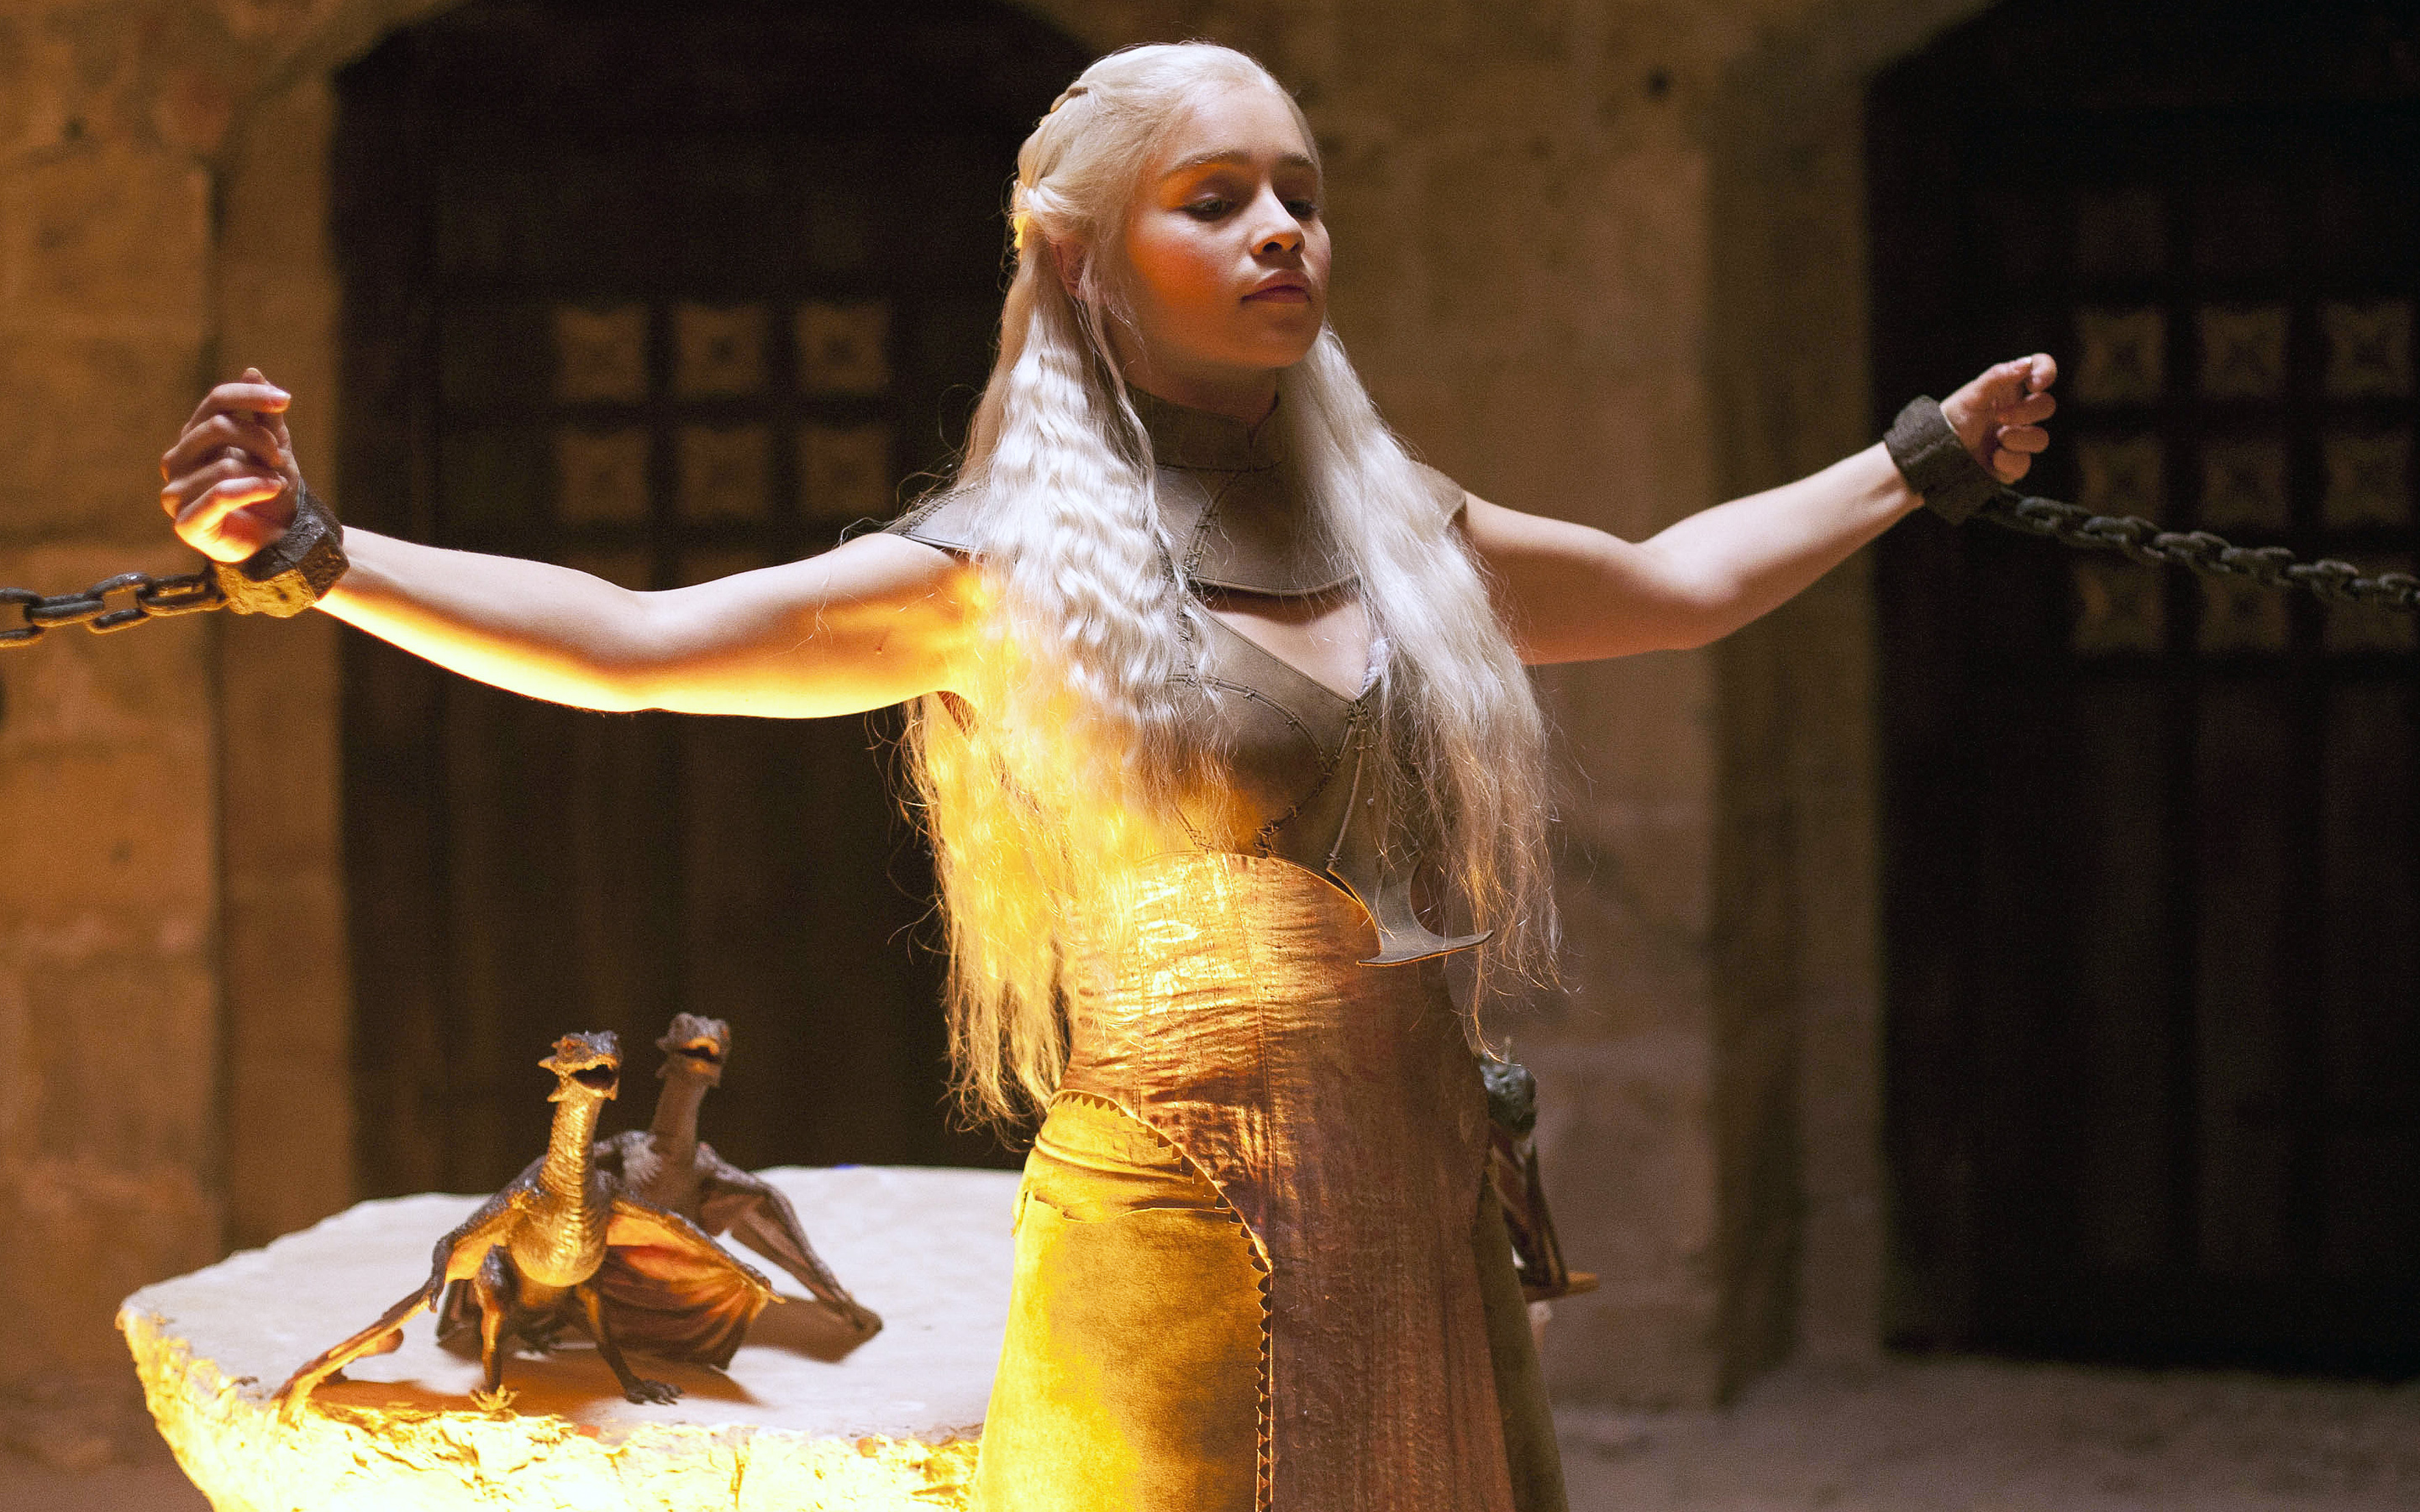 100+] Daenerys Targaryen Wallpapers | Wallpapers.com